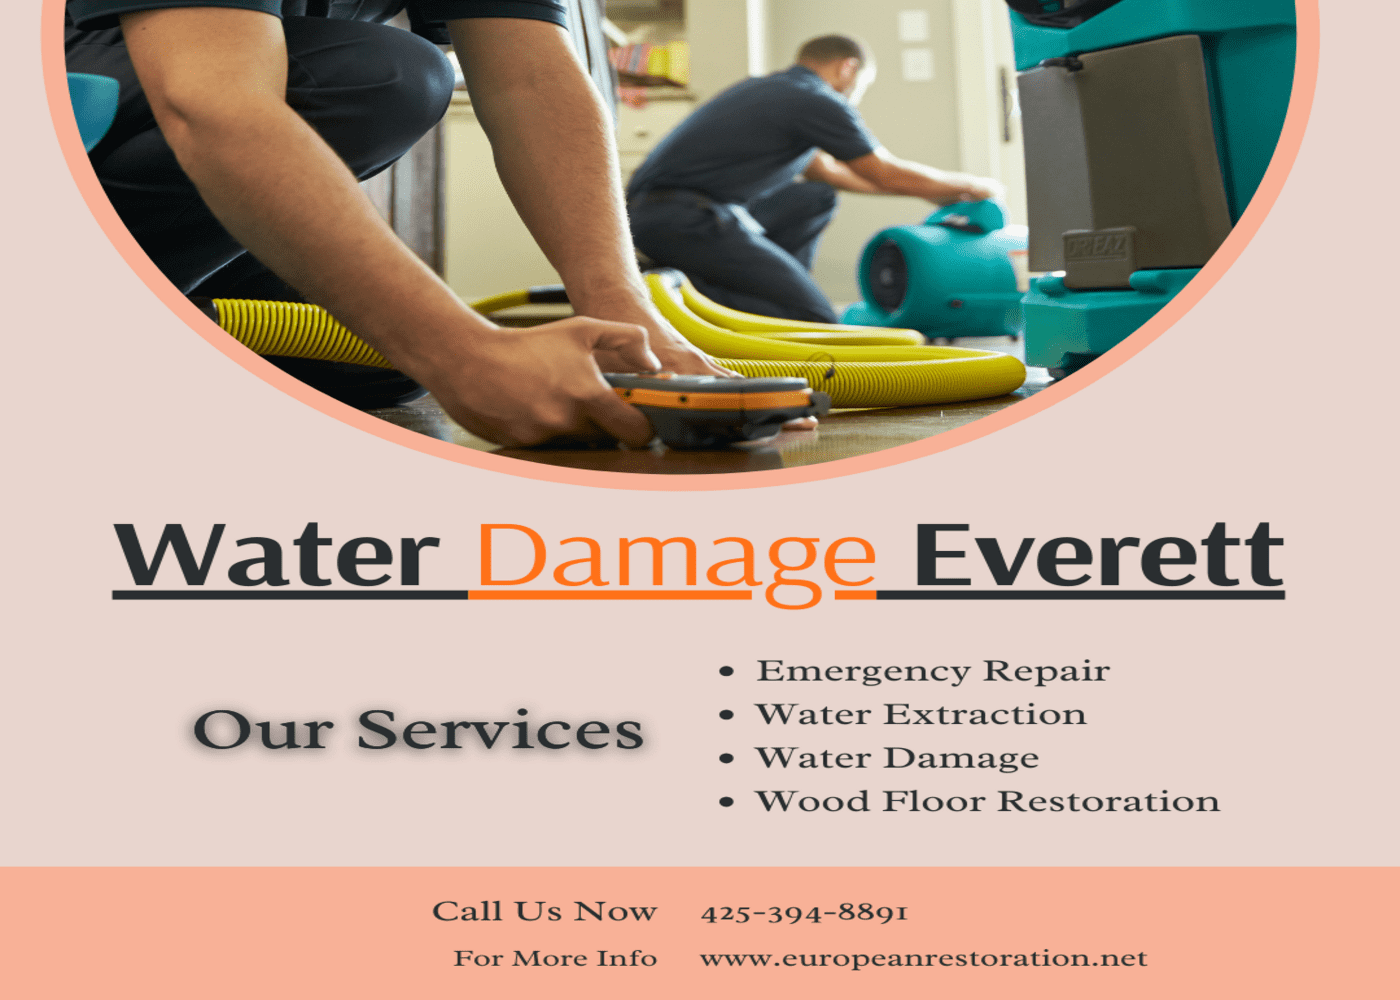 European Restoration: Elevating Water Damage Repair Services in Everett, WA